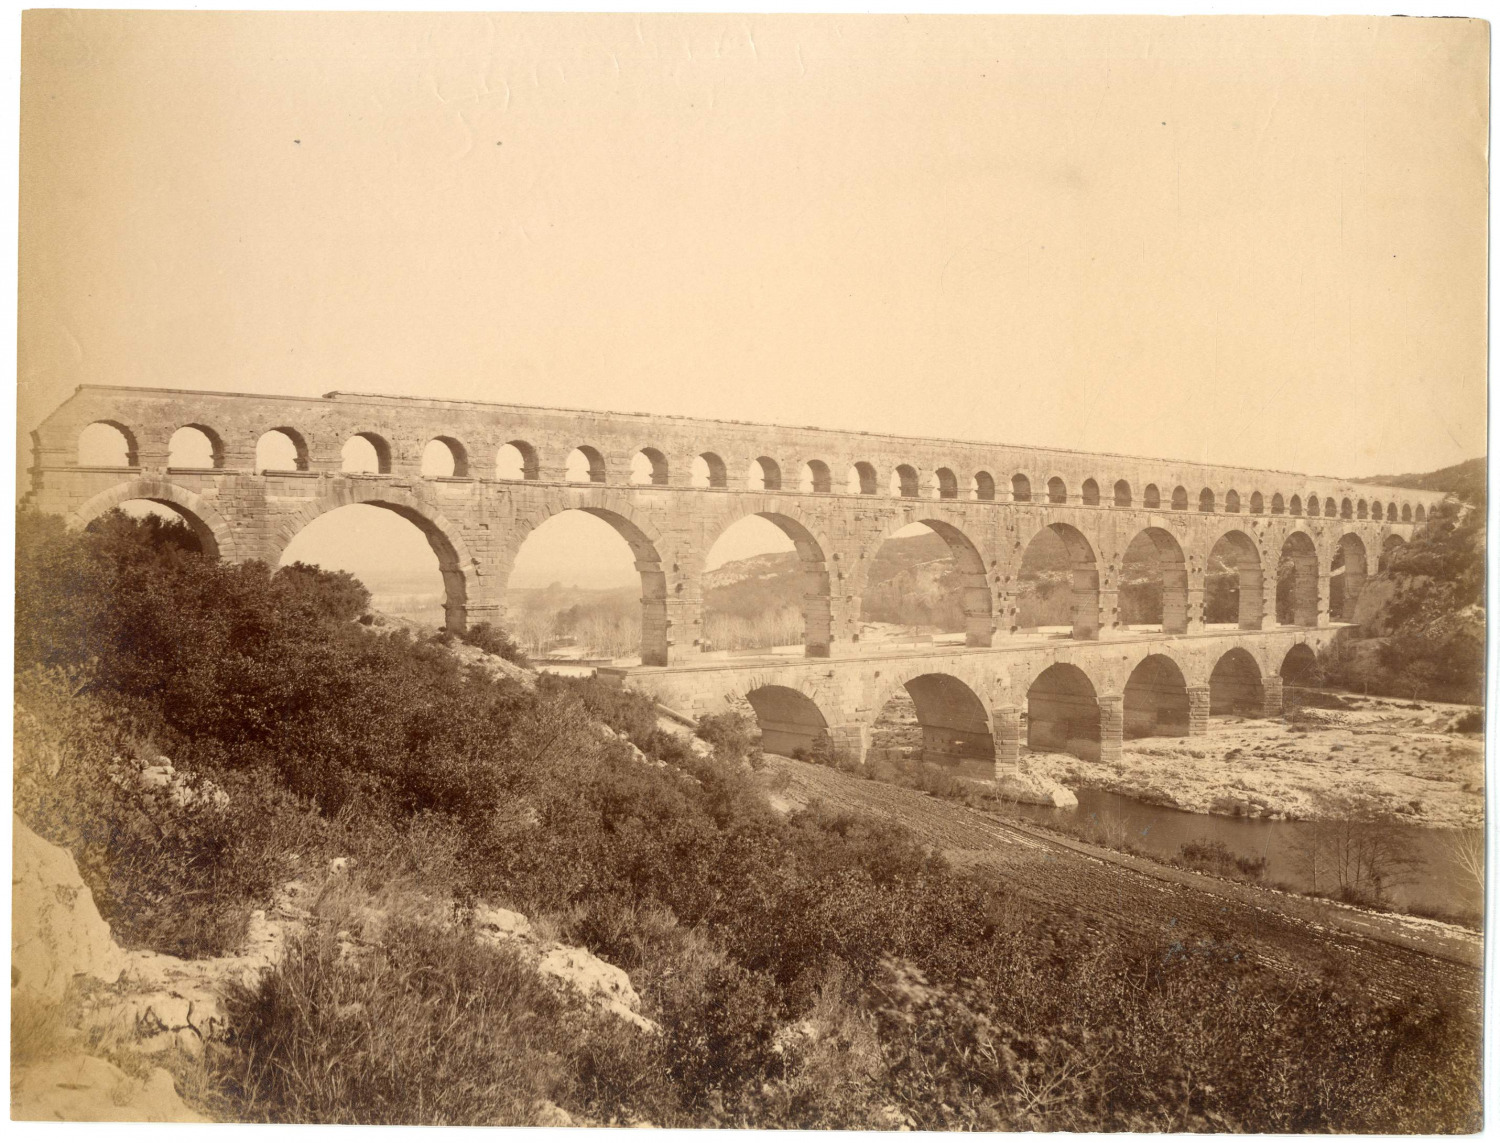 France, Vers-Pont-du-Gard, Aqueduct Romain vintage albumen print albumin print